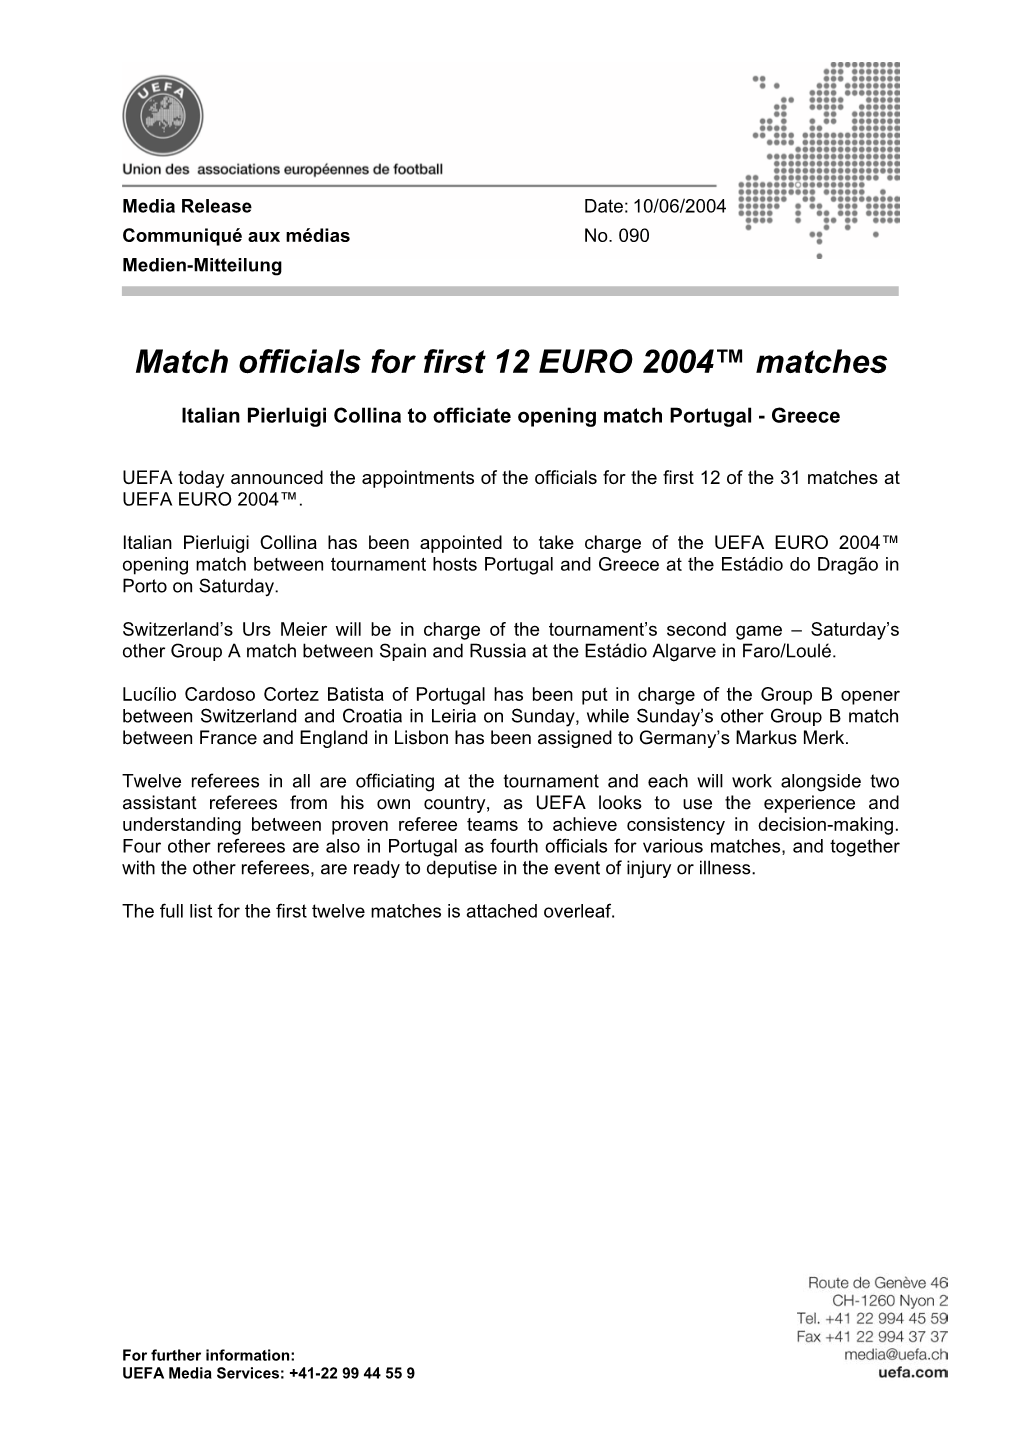 Match Officials for First 12 EURO 2004™ Matches